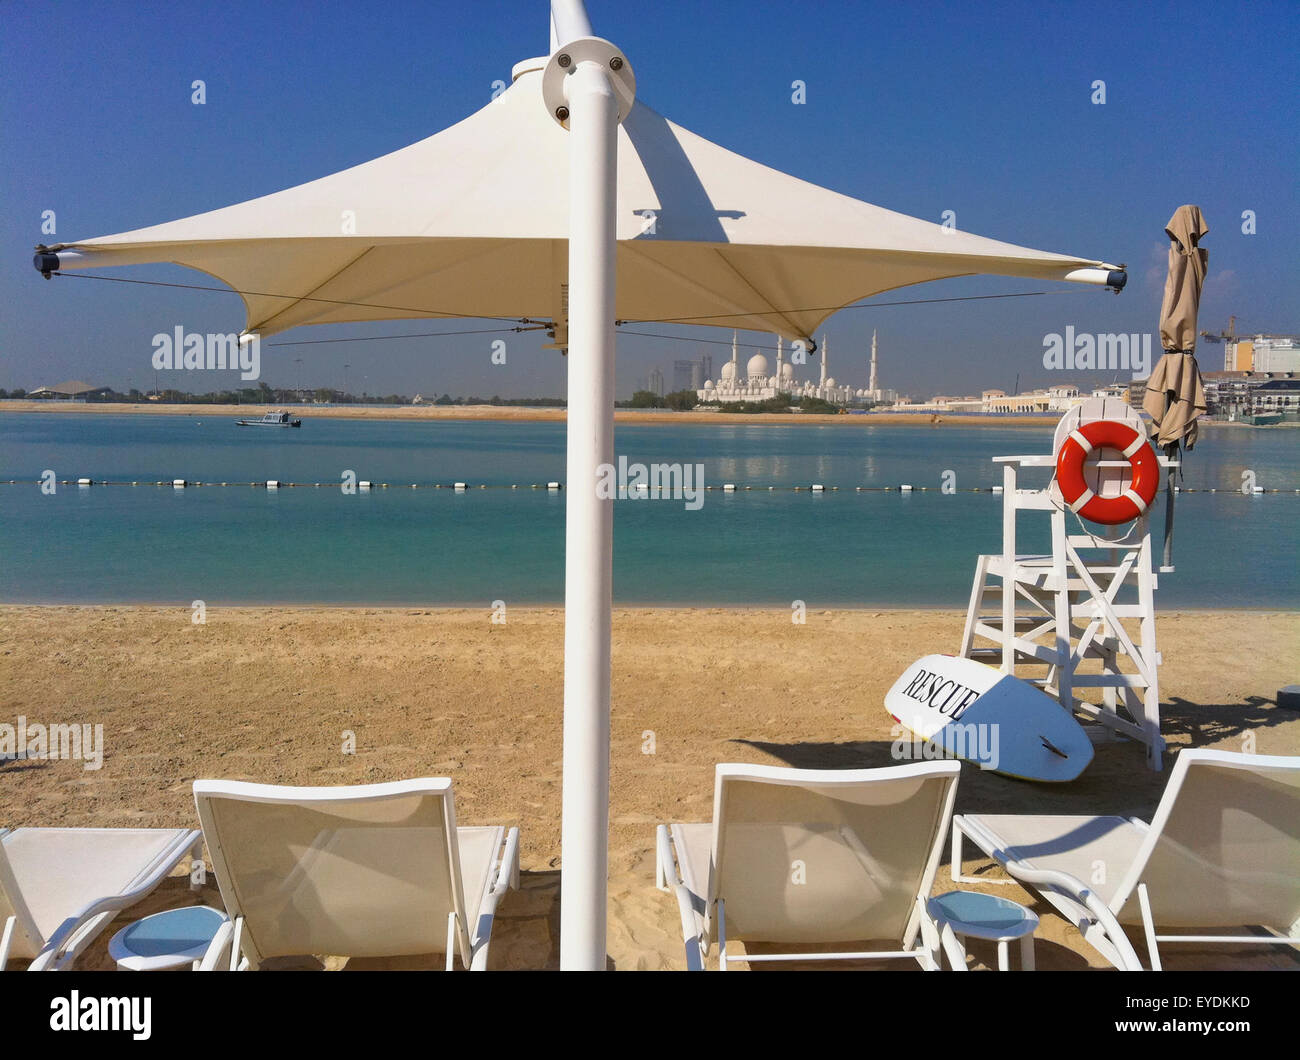 United Arab Emirates, Abu Dahbi, Shangri-la Hotel, Shaikh Zayed Bin Sultan Al Nahyan Mosque in background, Parasol on beach Stock Photo